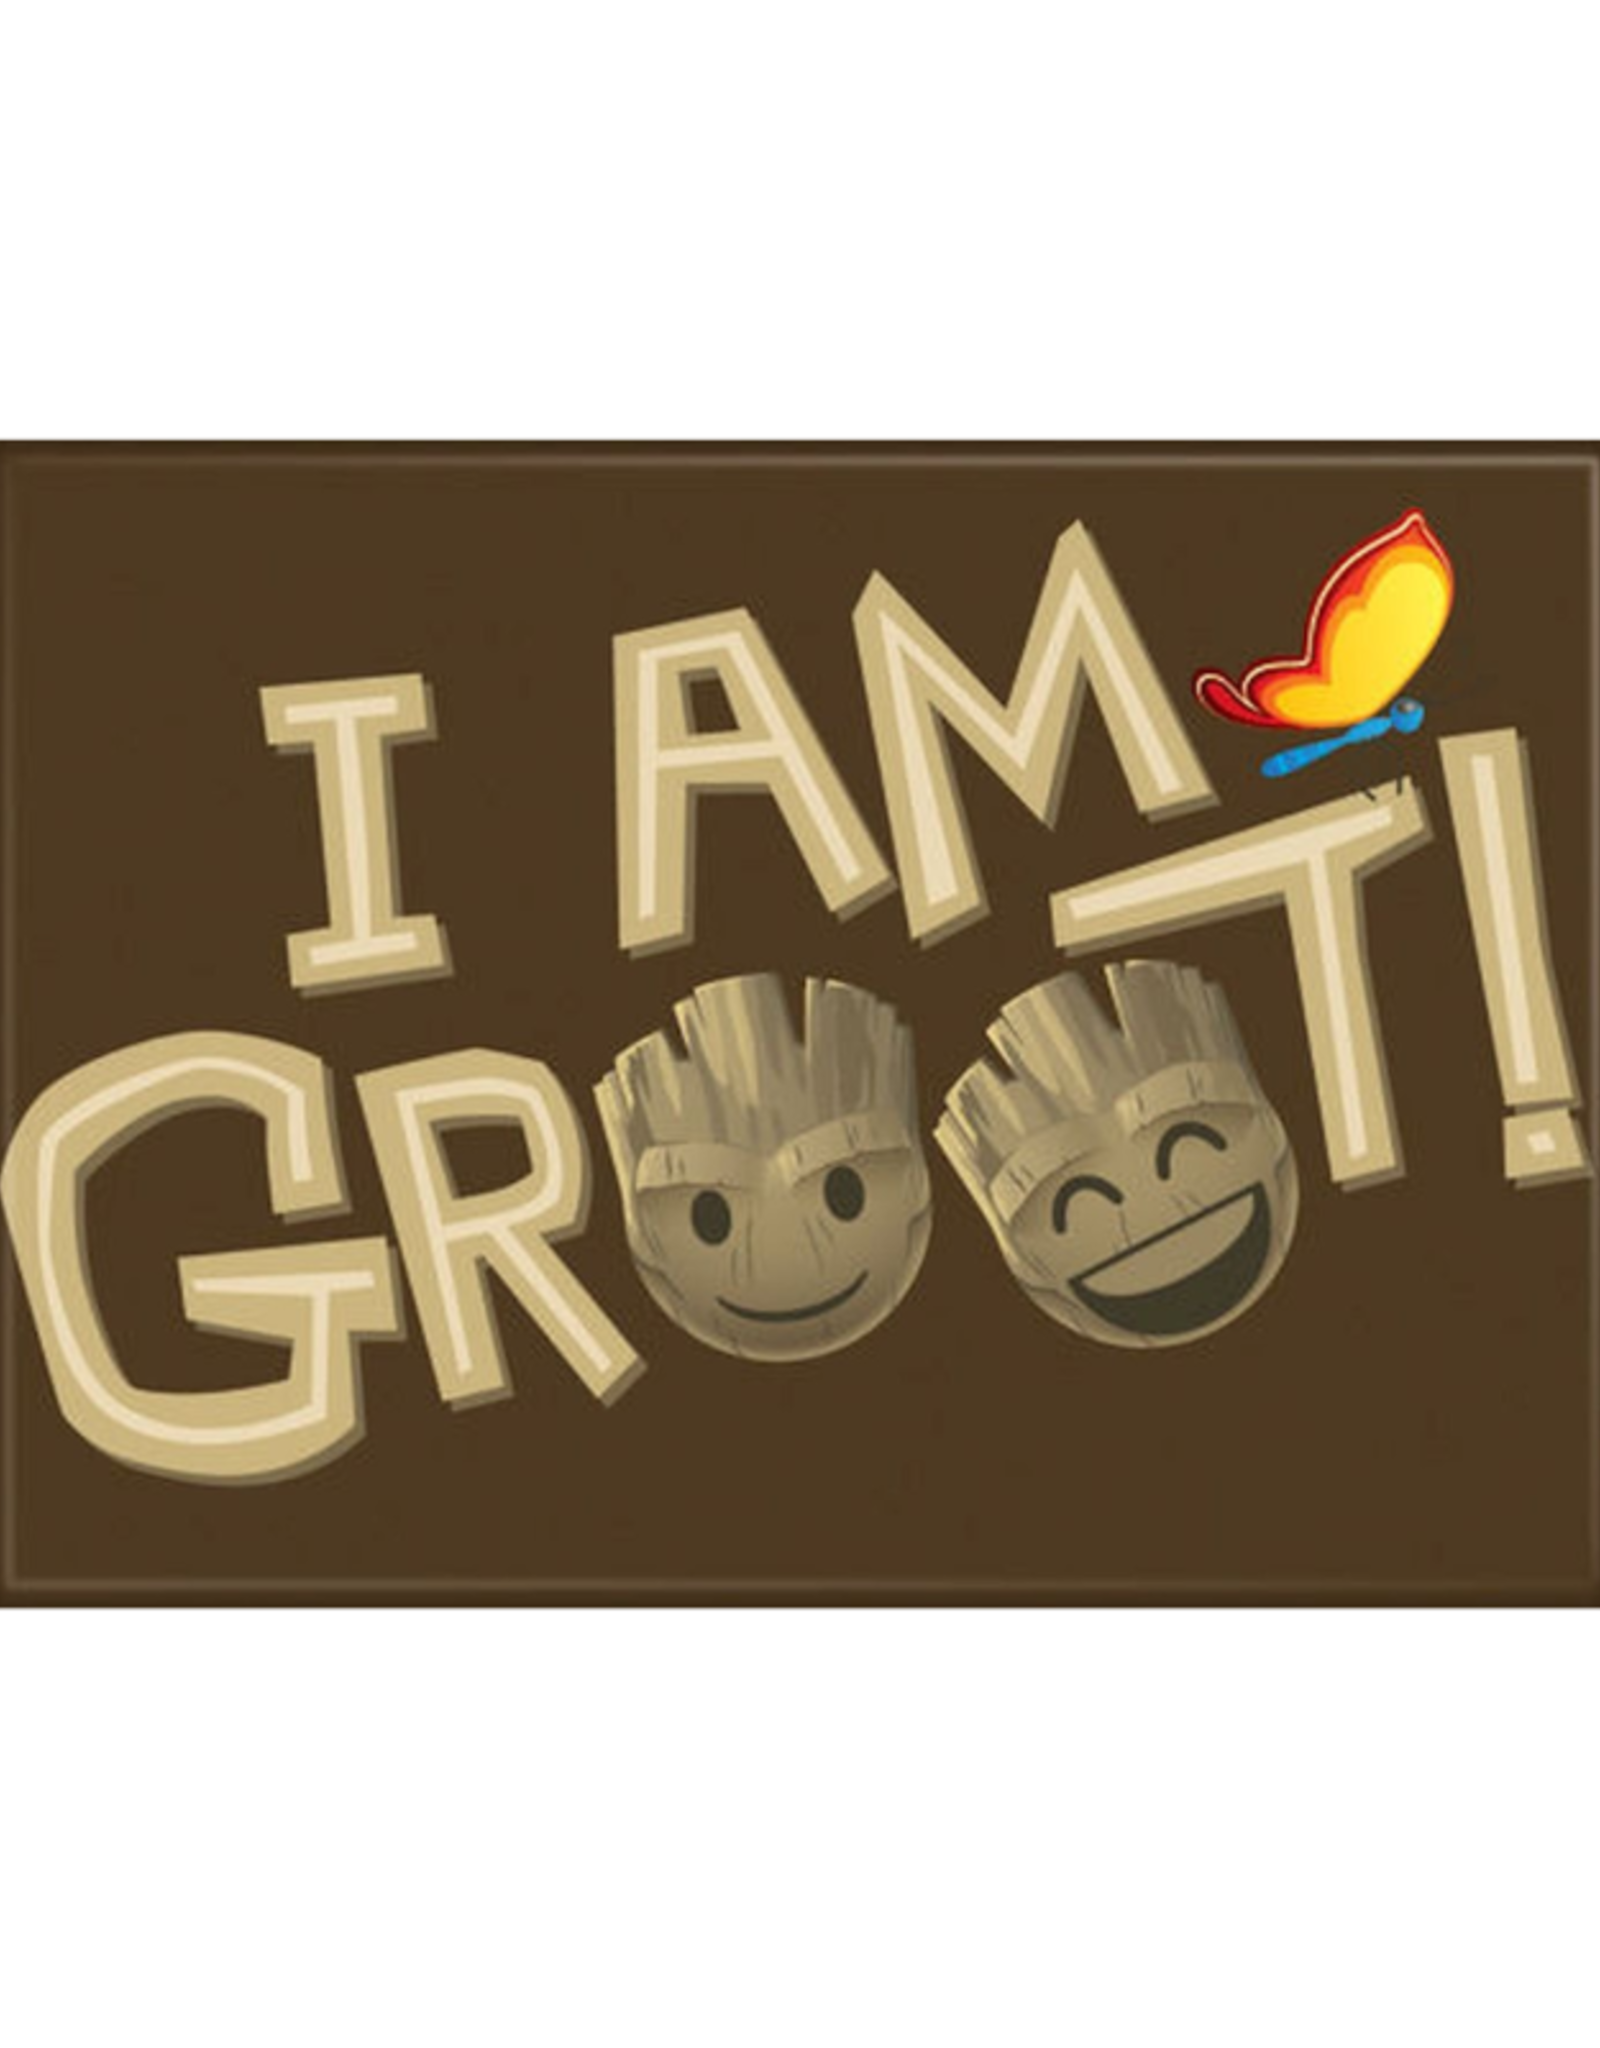 Ata-Boy Guardians of the Galaxy: I Am Groot